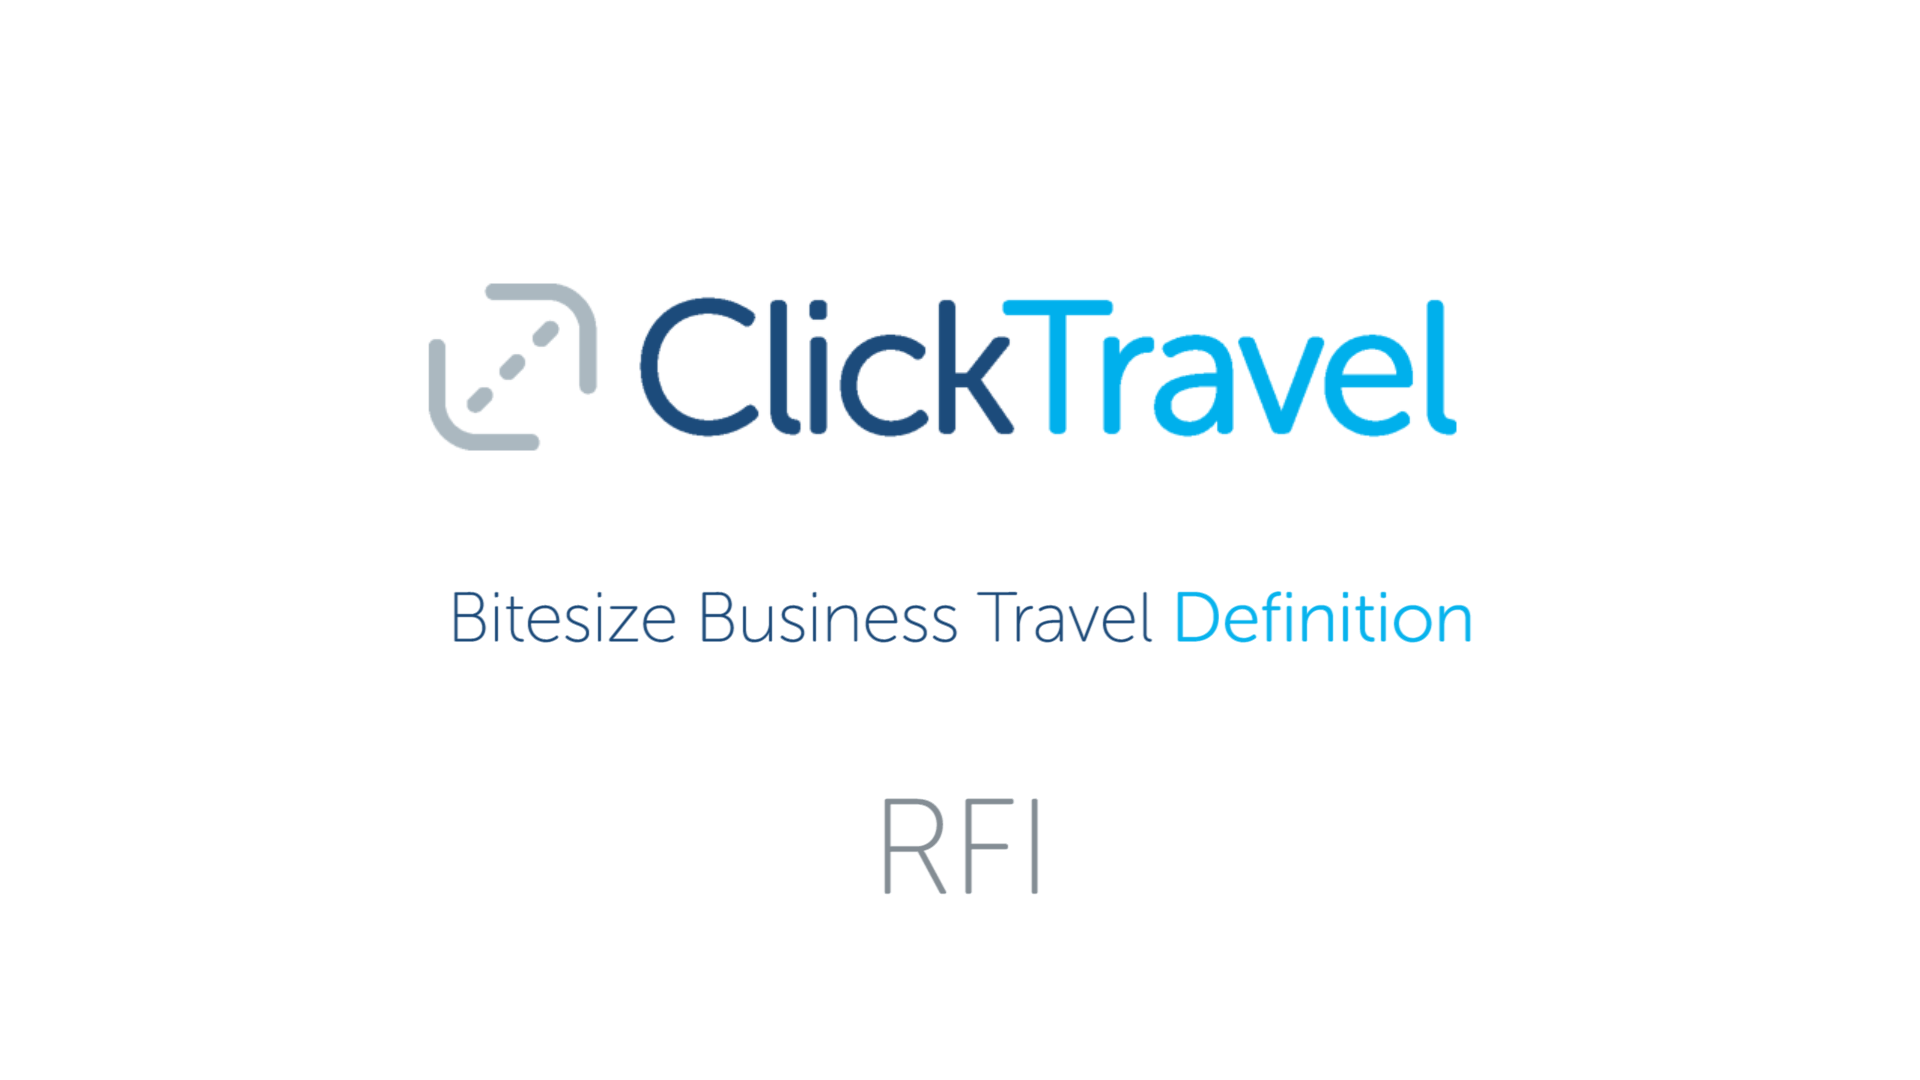 RFI Logo - Image result for rfi logo | logo | Logos